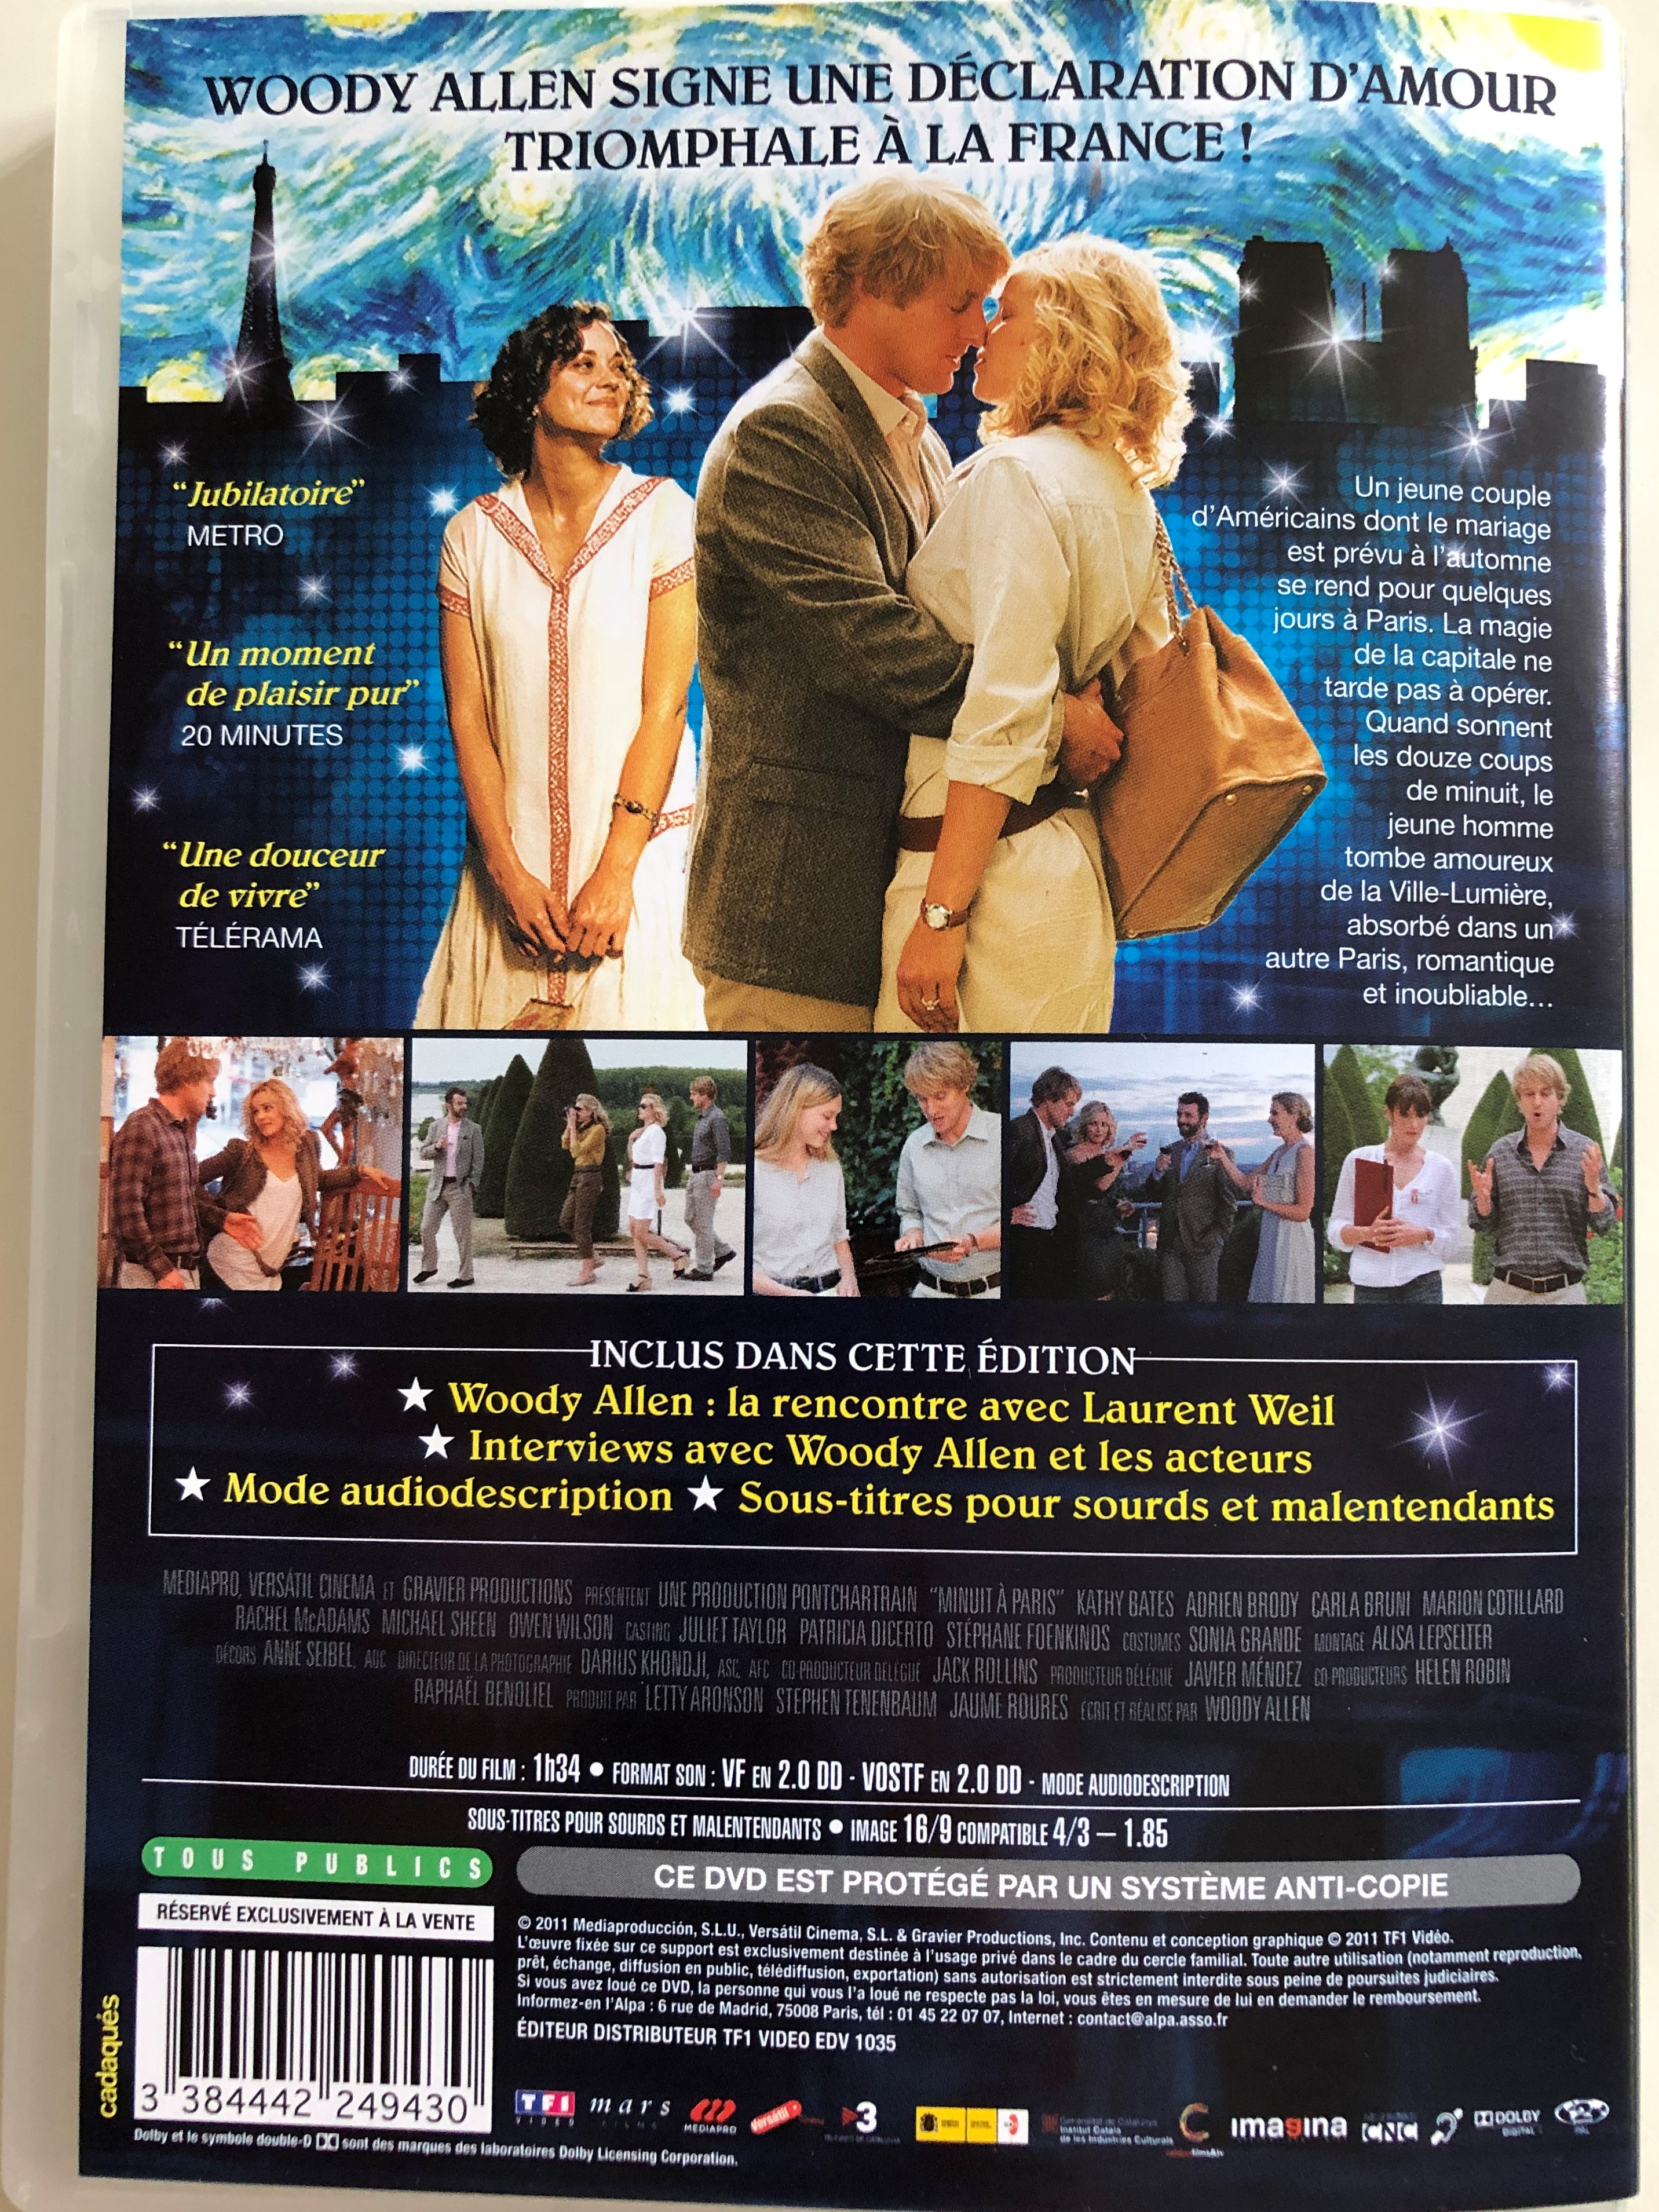 Midnight in Paris DVD 2011 Minuit à Paris / Directed by Woody Allen /  Starring: Kathy Bates, Adrien Brody, Carla Bruni, Marion Cotillard, Rachel  McAdams, Michael Sheen, Owen Wilson - bibleinmylanguage